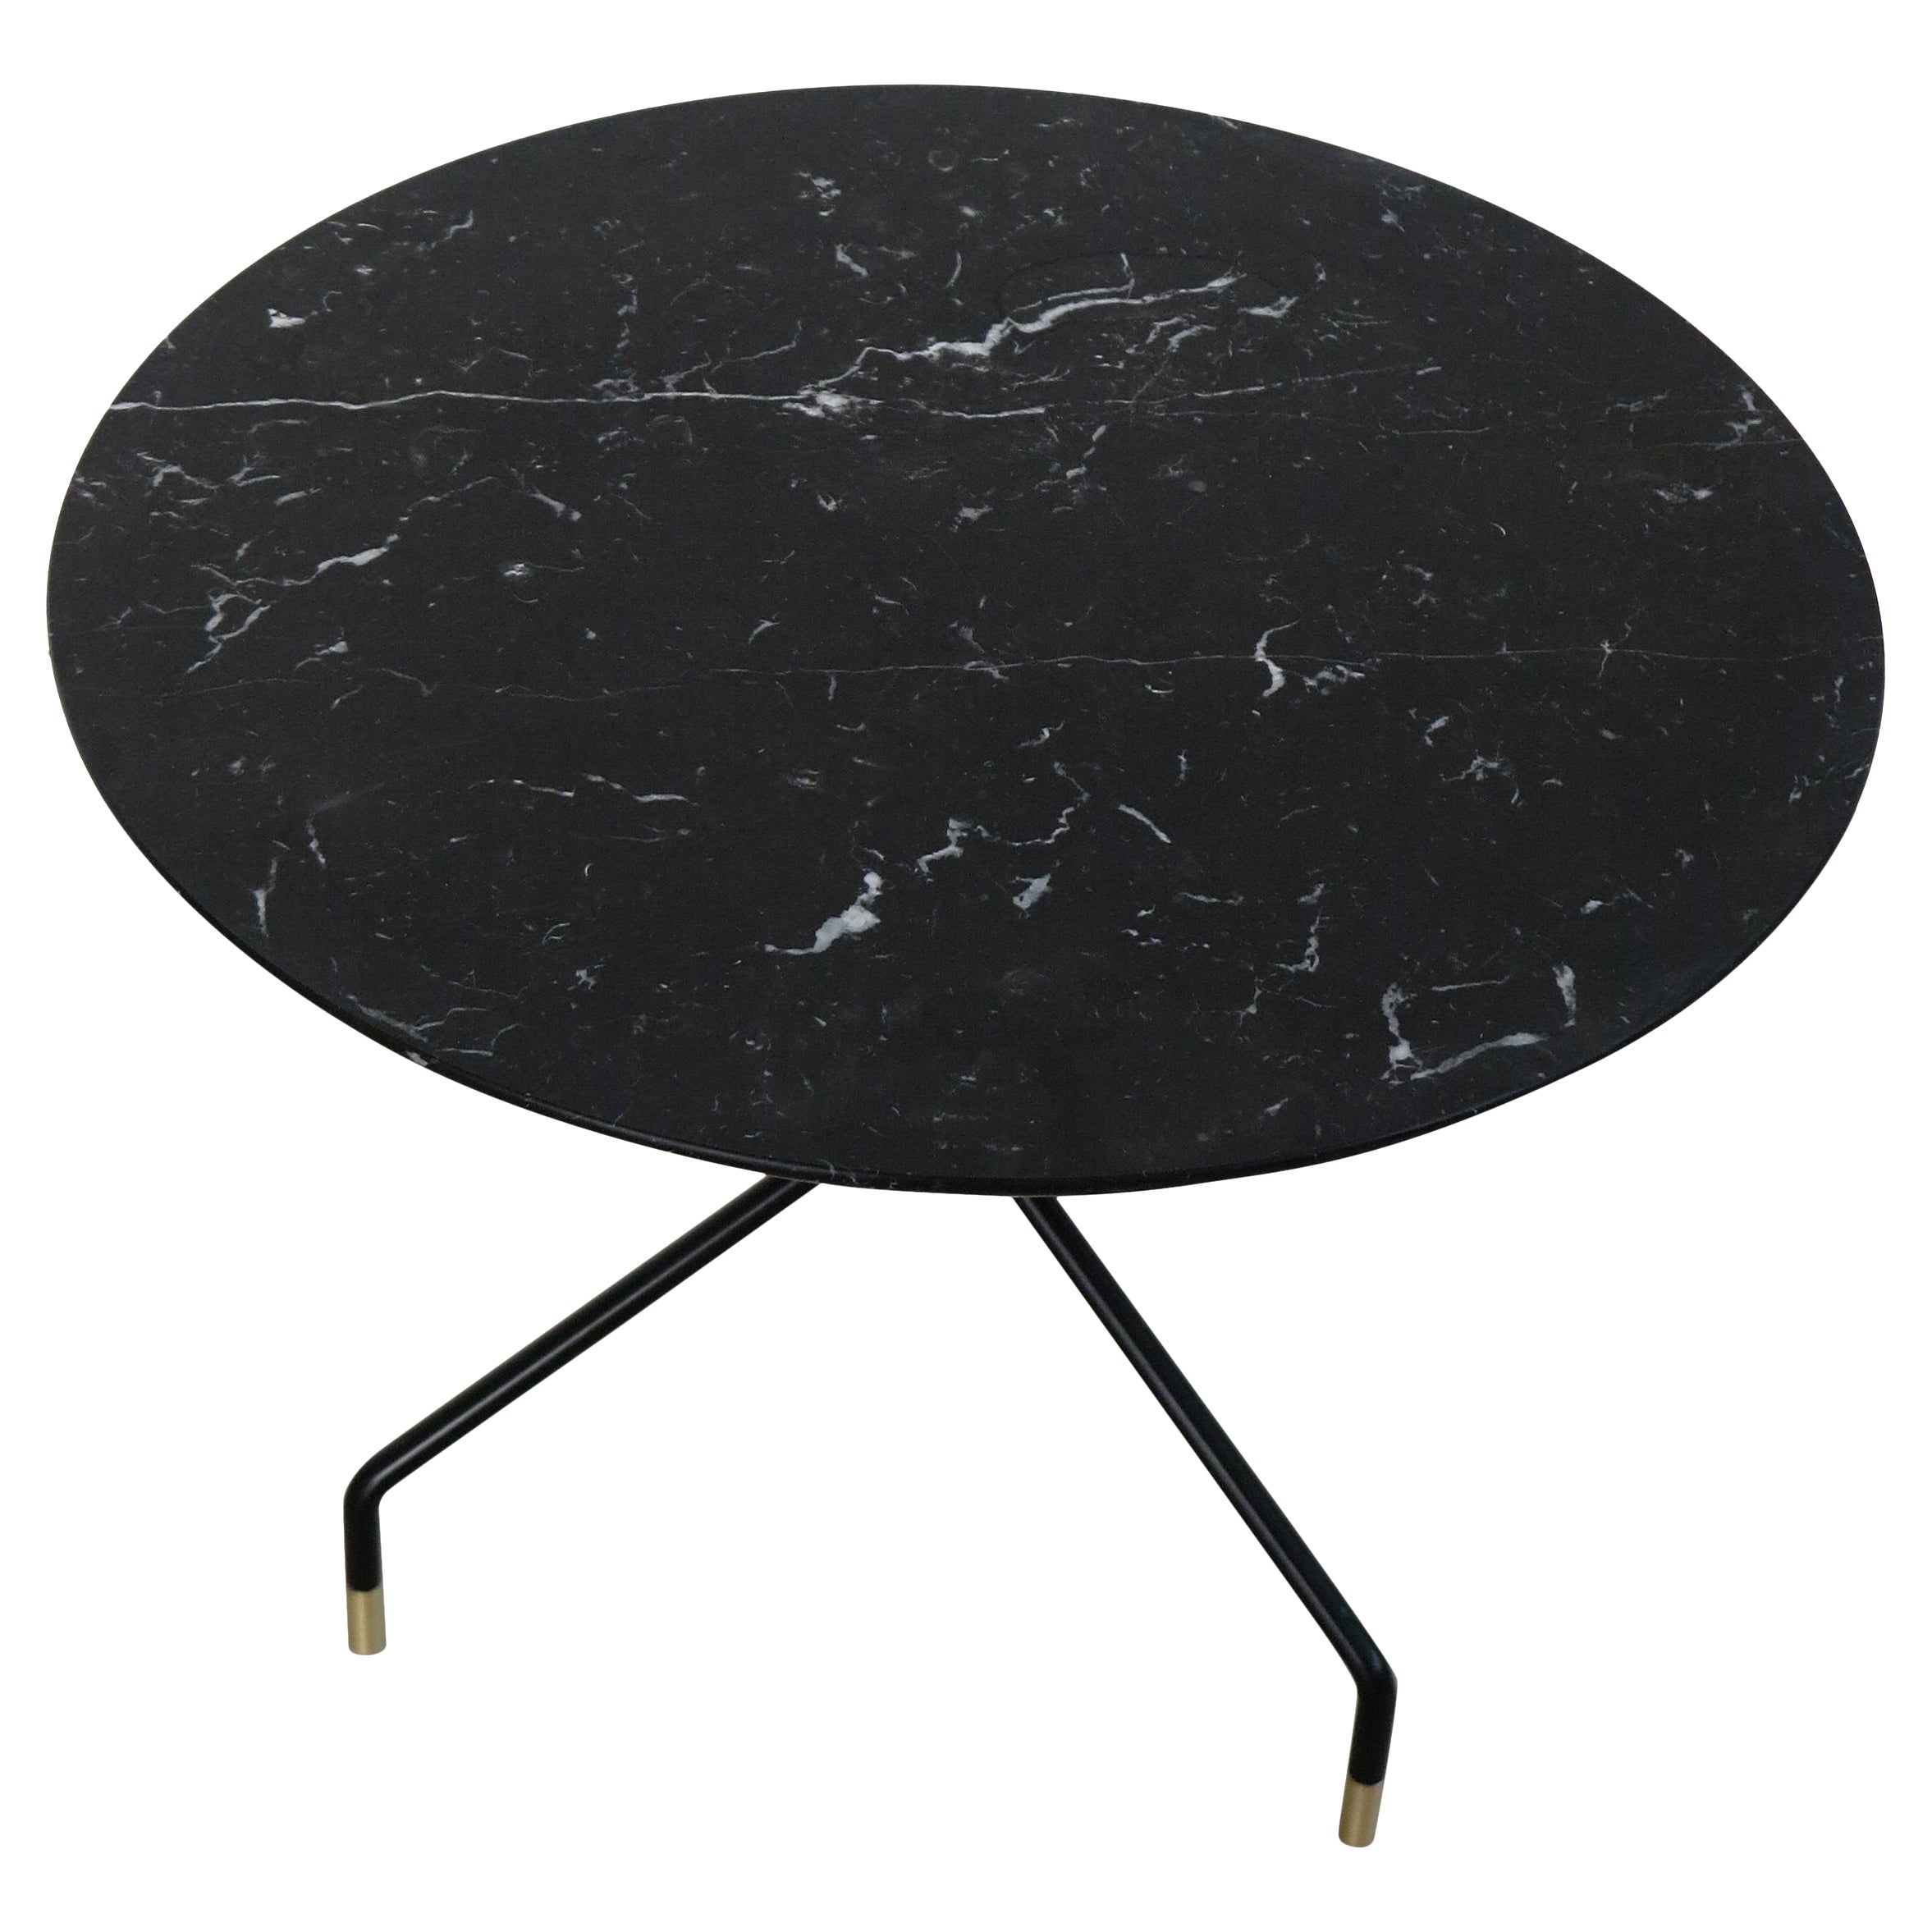 Italian Contemporary Black Marble Round Coffee Table New Design Capperidicasa